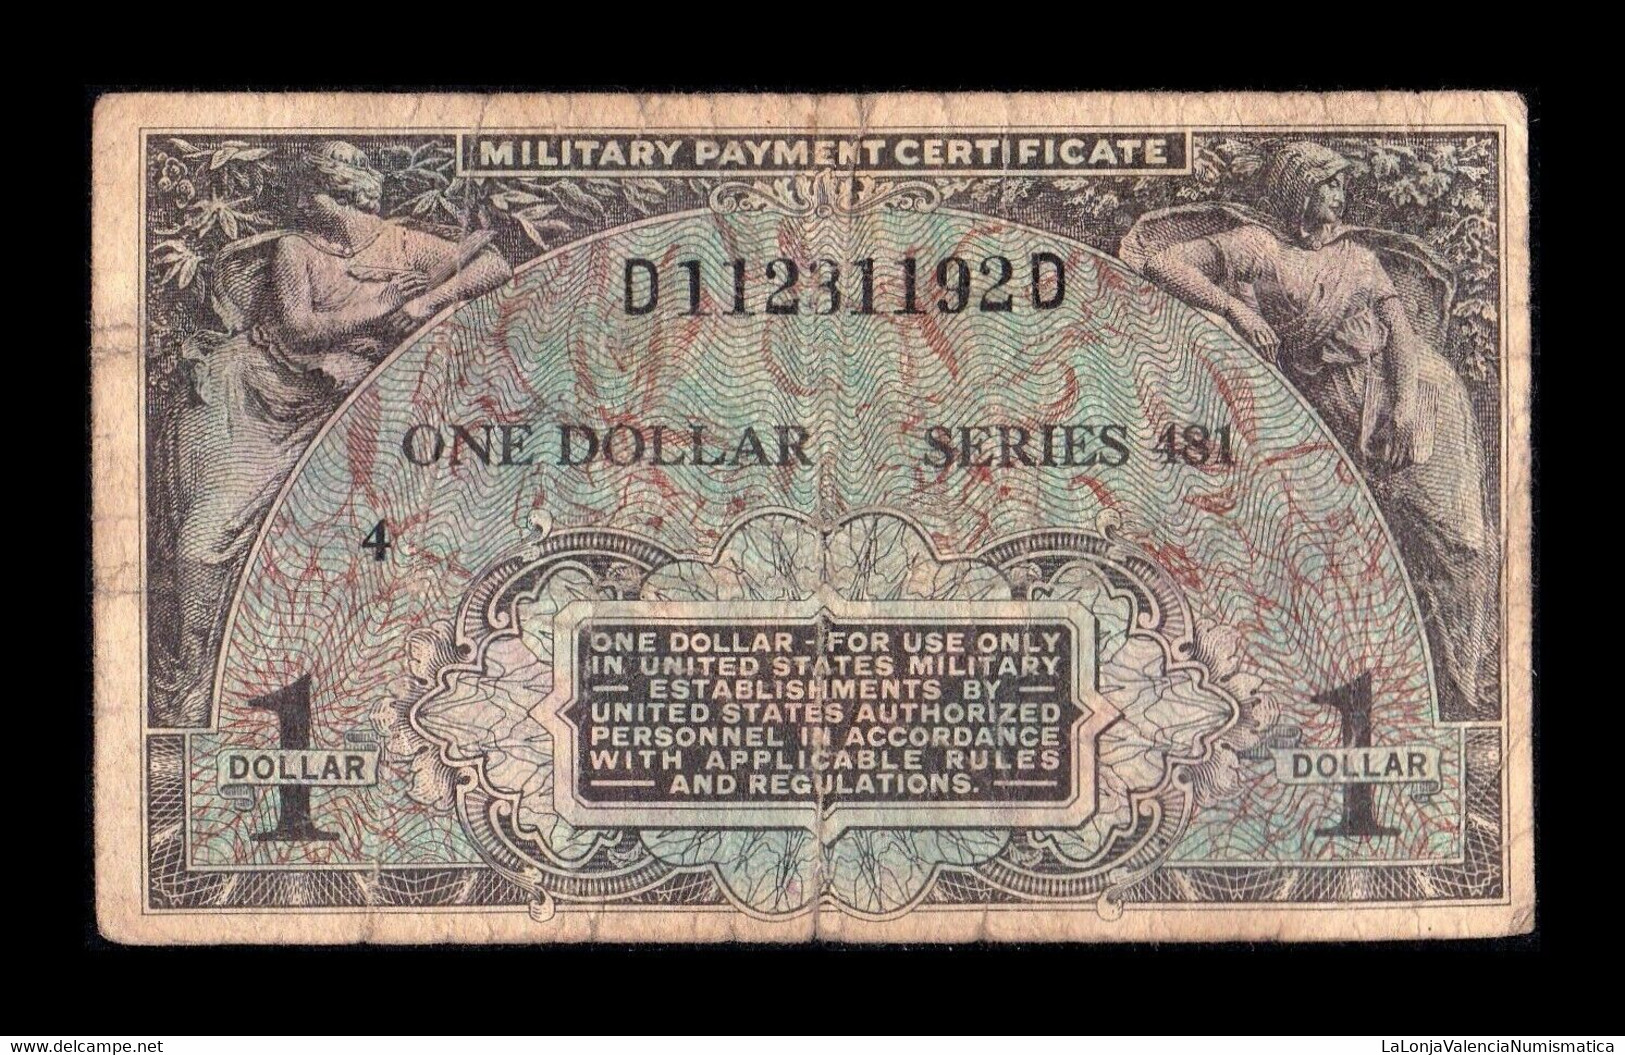 Estados Unidos United States 1 Dollar 1951-1954 Pick M26 Series 481 BC F - 1951-1954 - Series 481